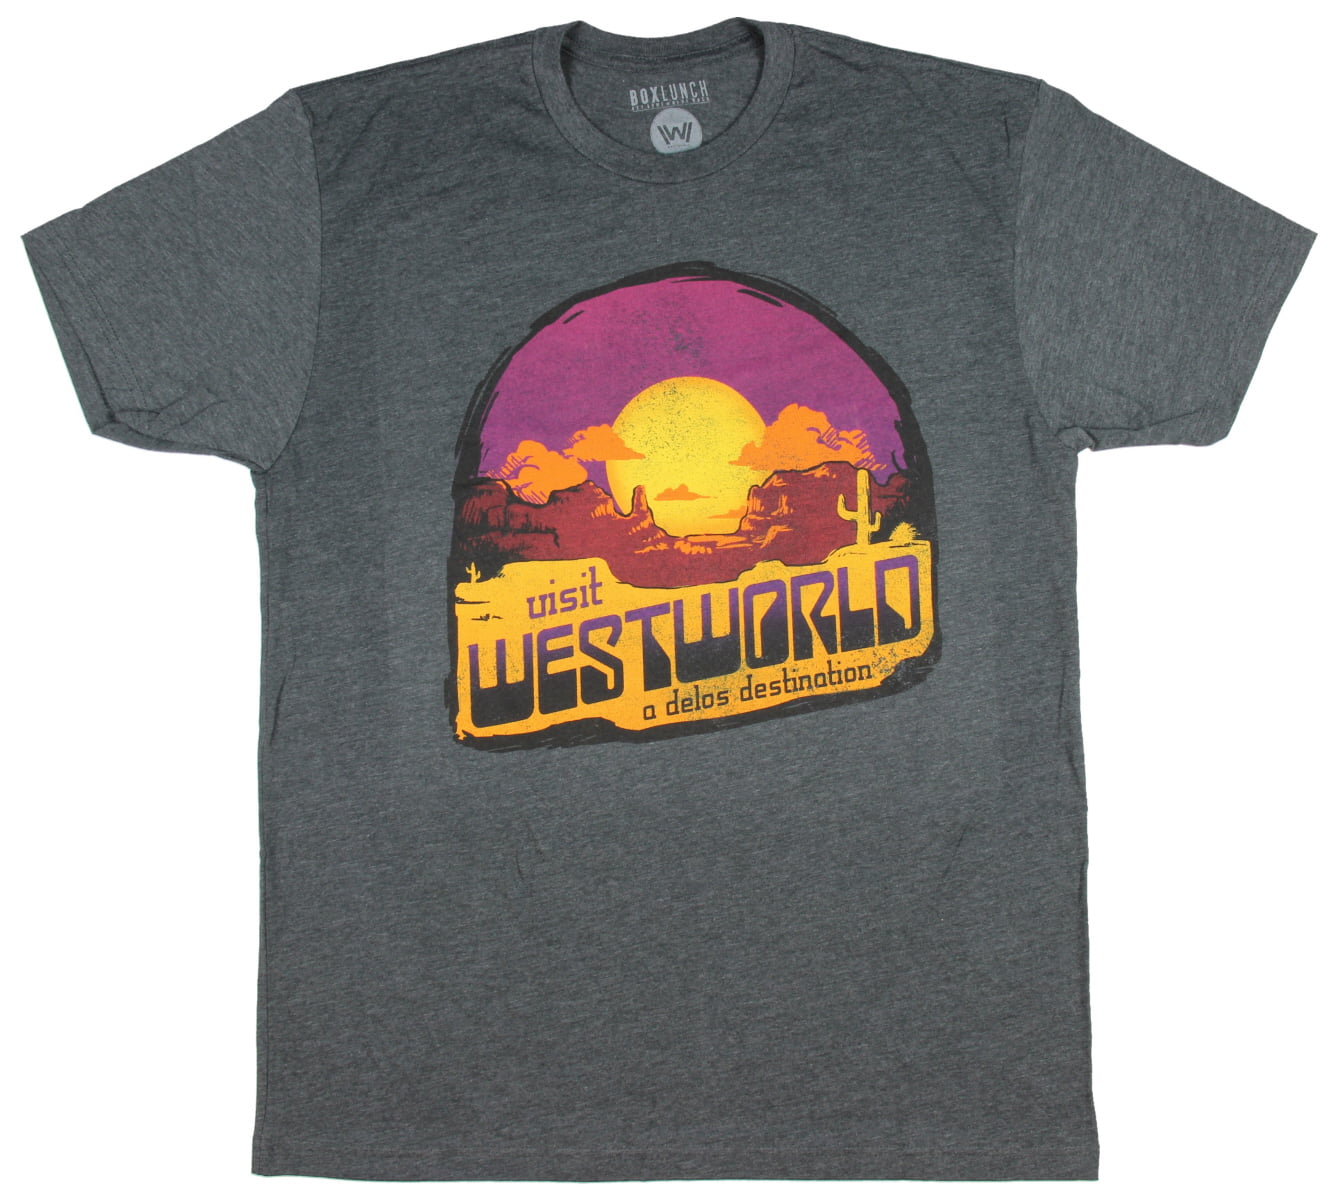 Black Officially Licensed Westworld Poster Men's T-Shirt S-XXL Sizes